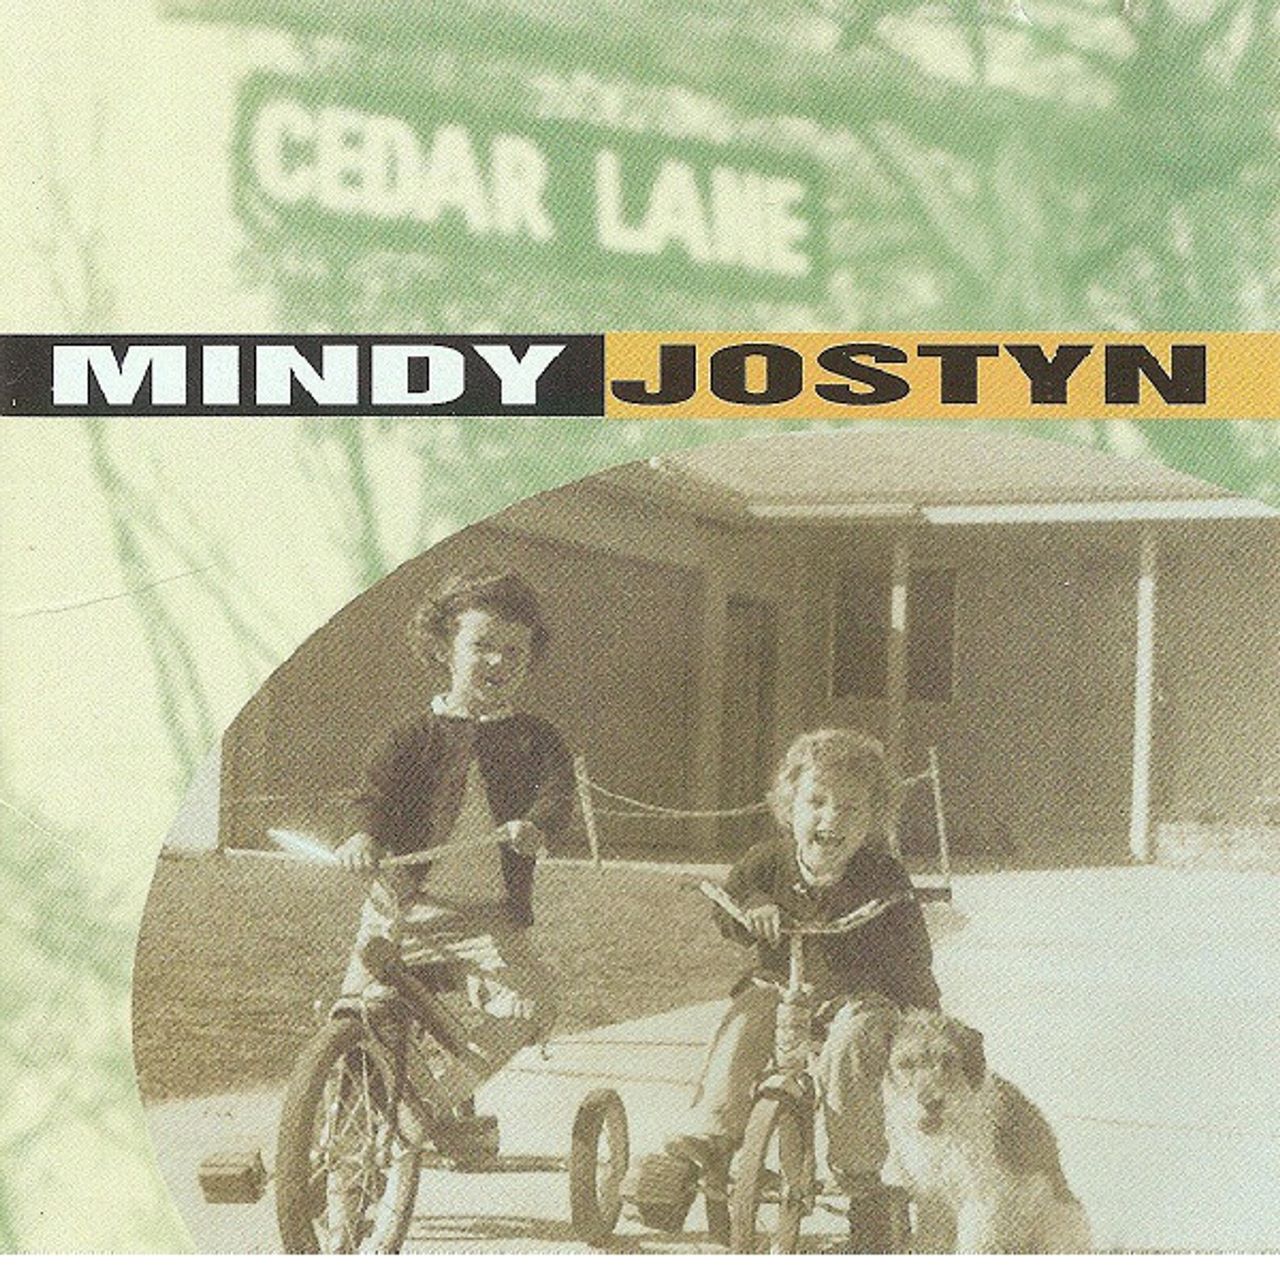 Mindy Jostyn - Cedar Lane cover album